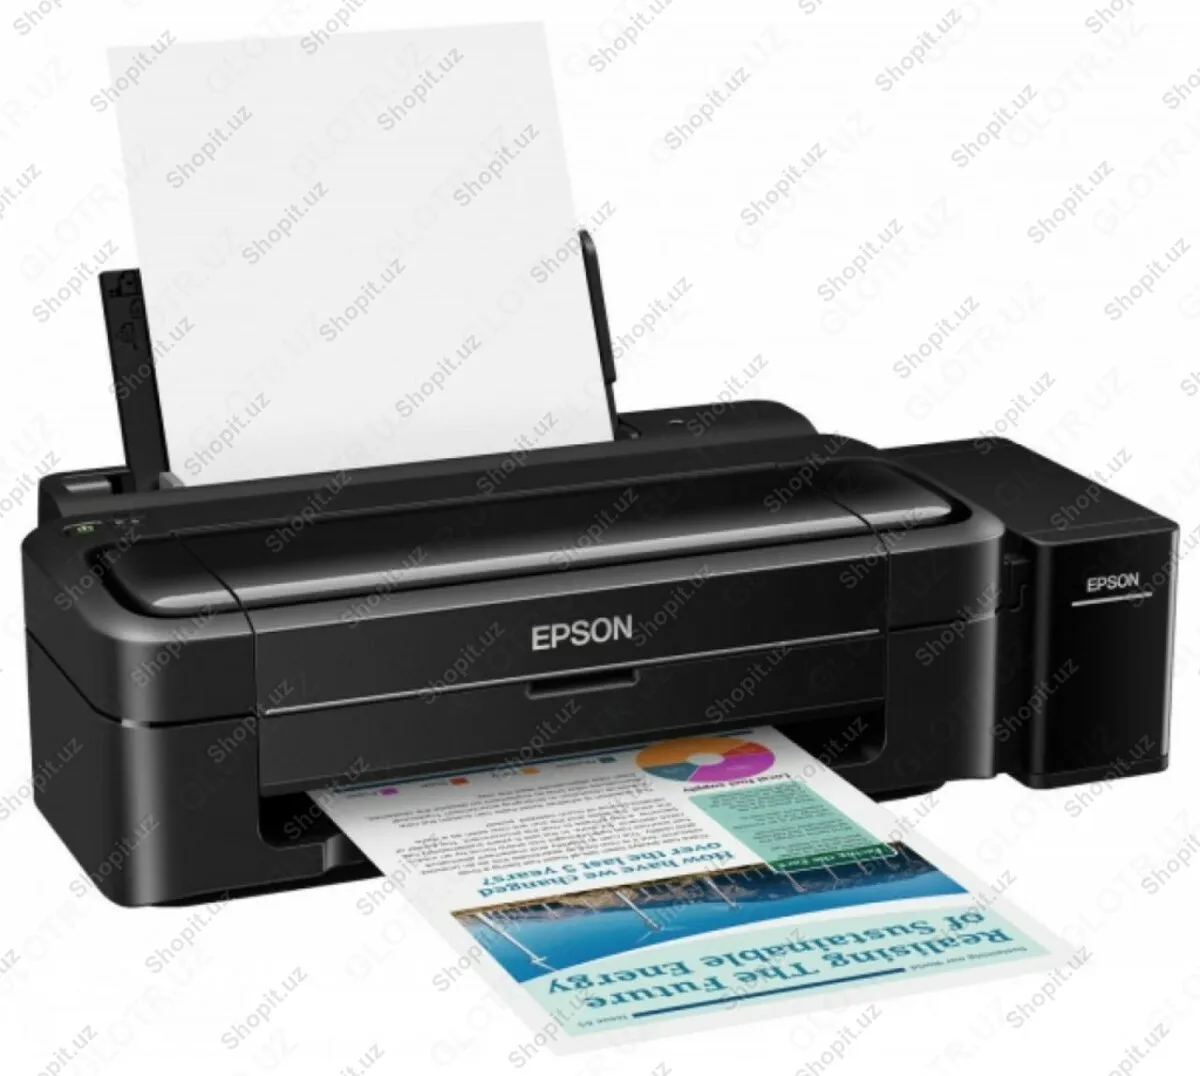 Epson L312 printer#1